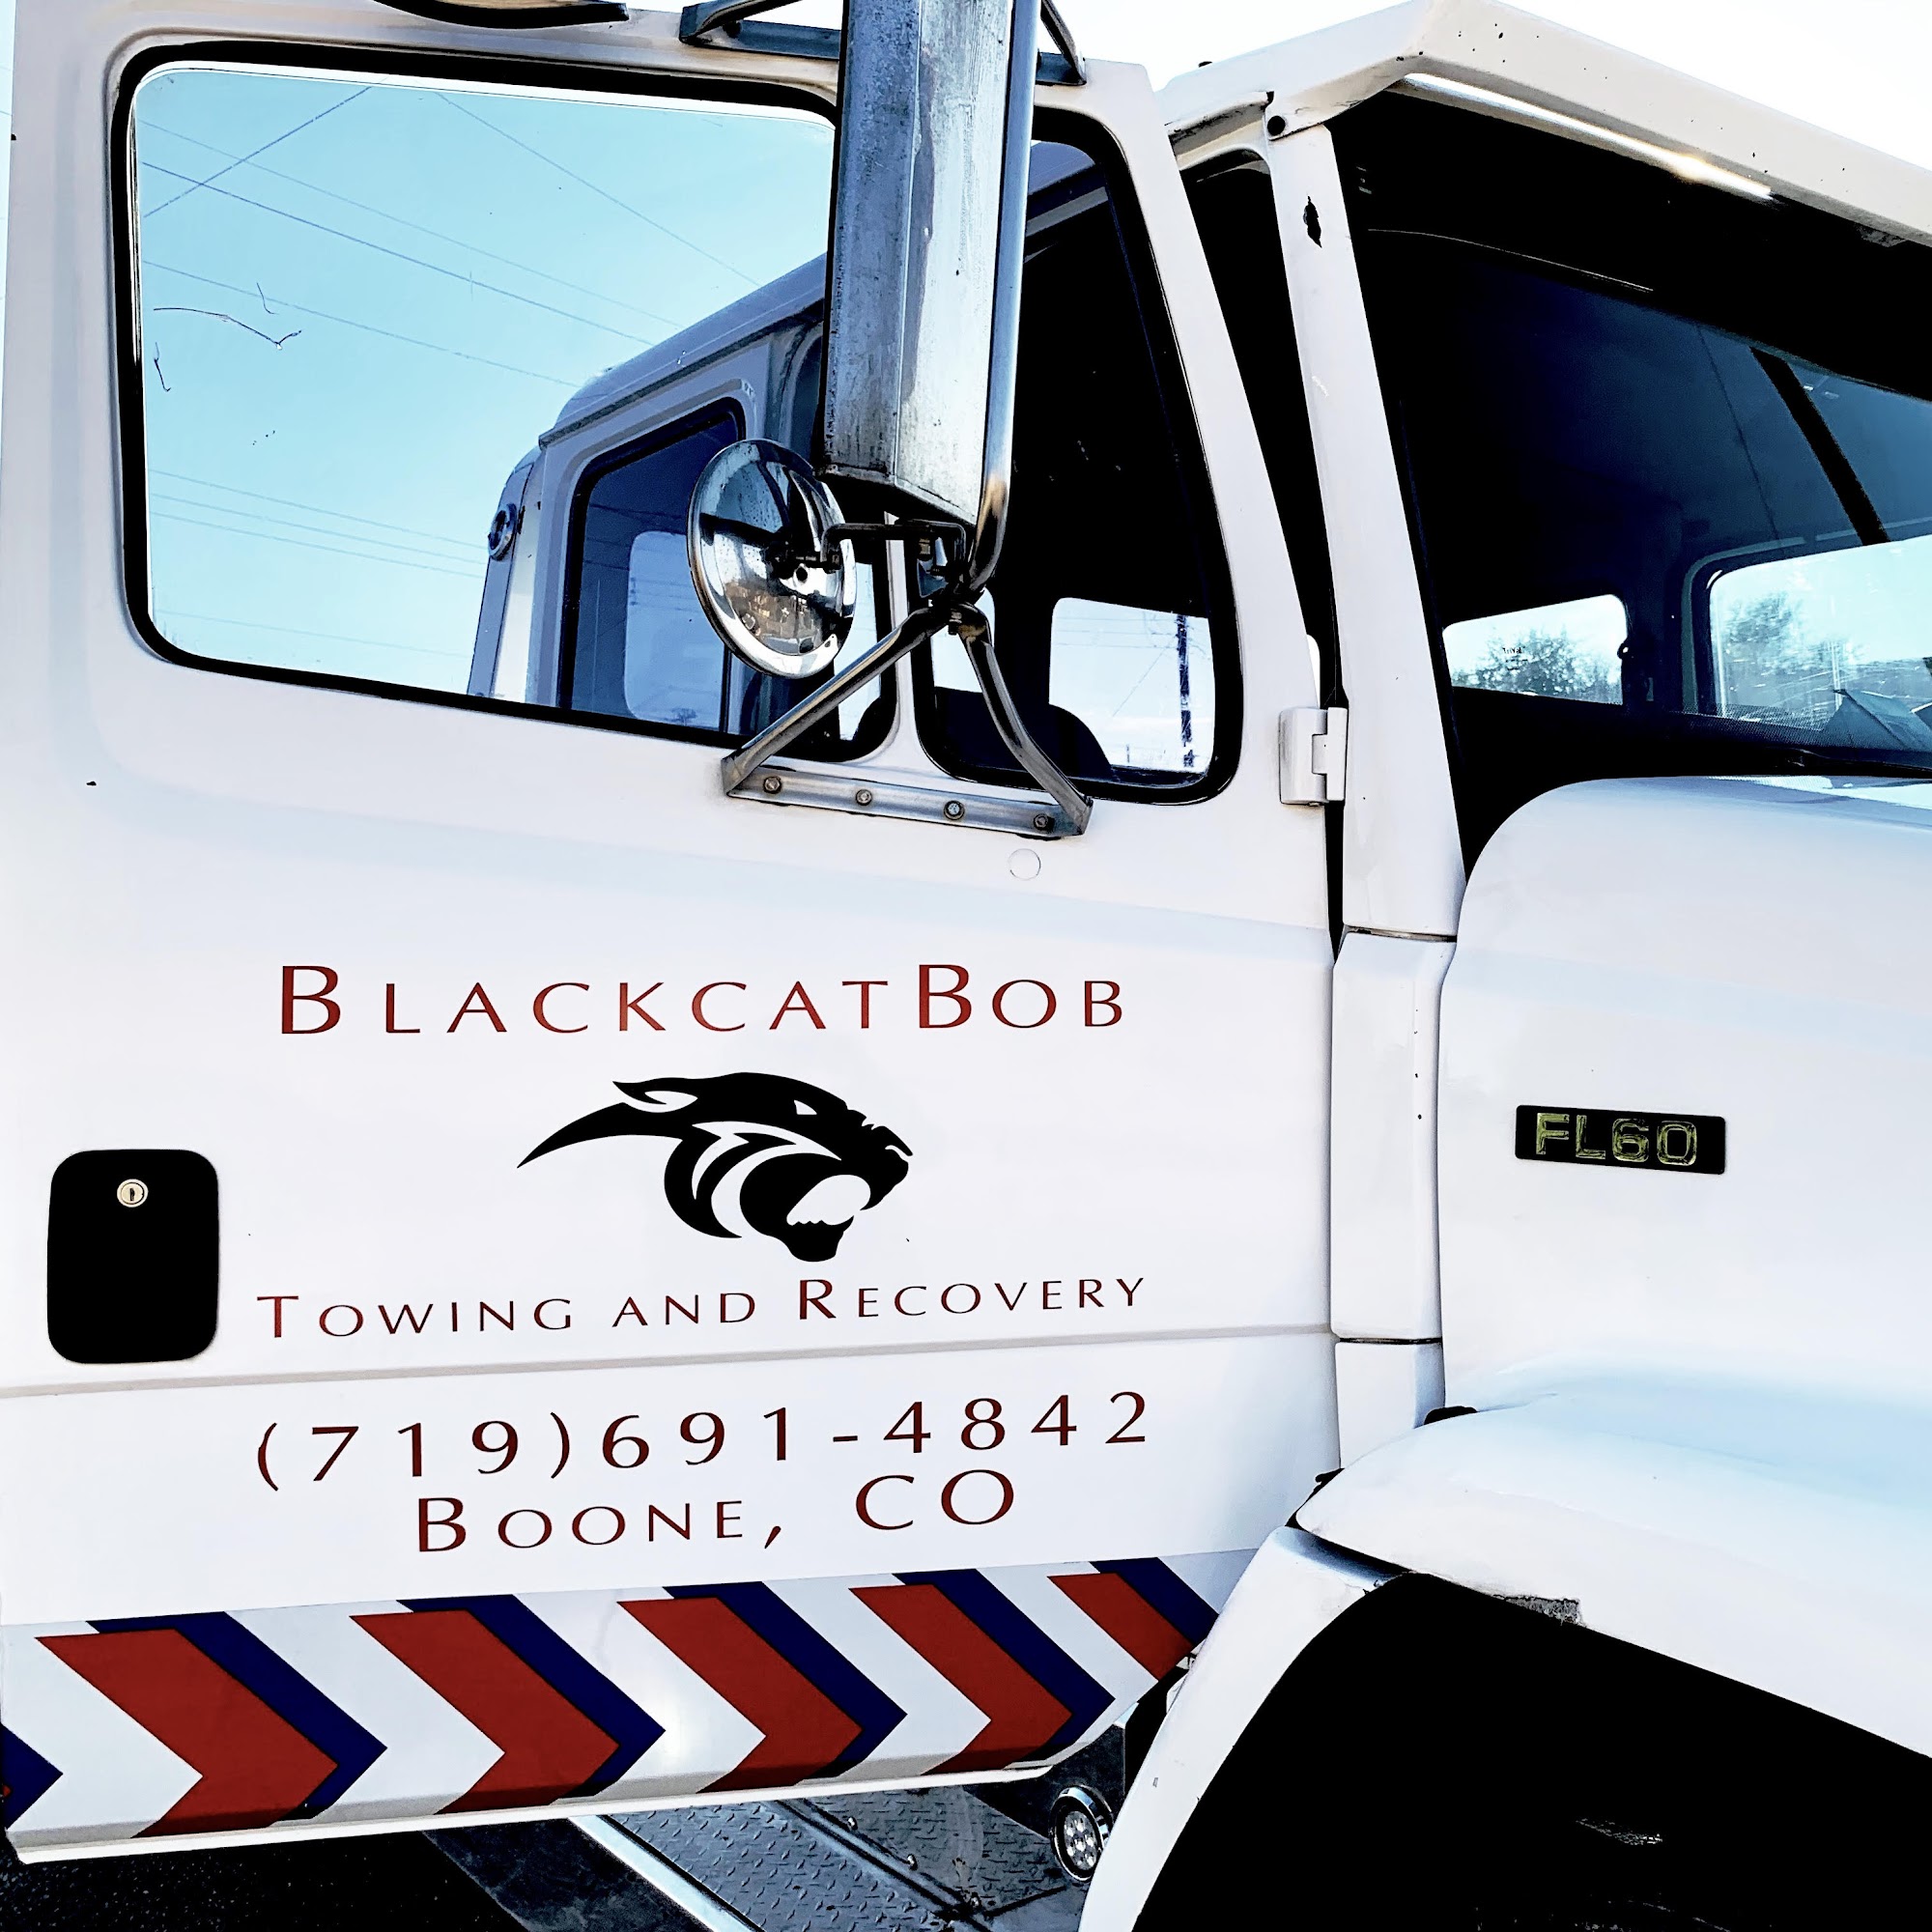 Blackcatbob Towing & Recovery LLC